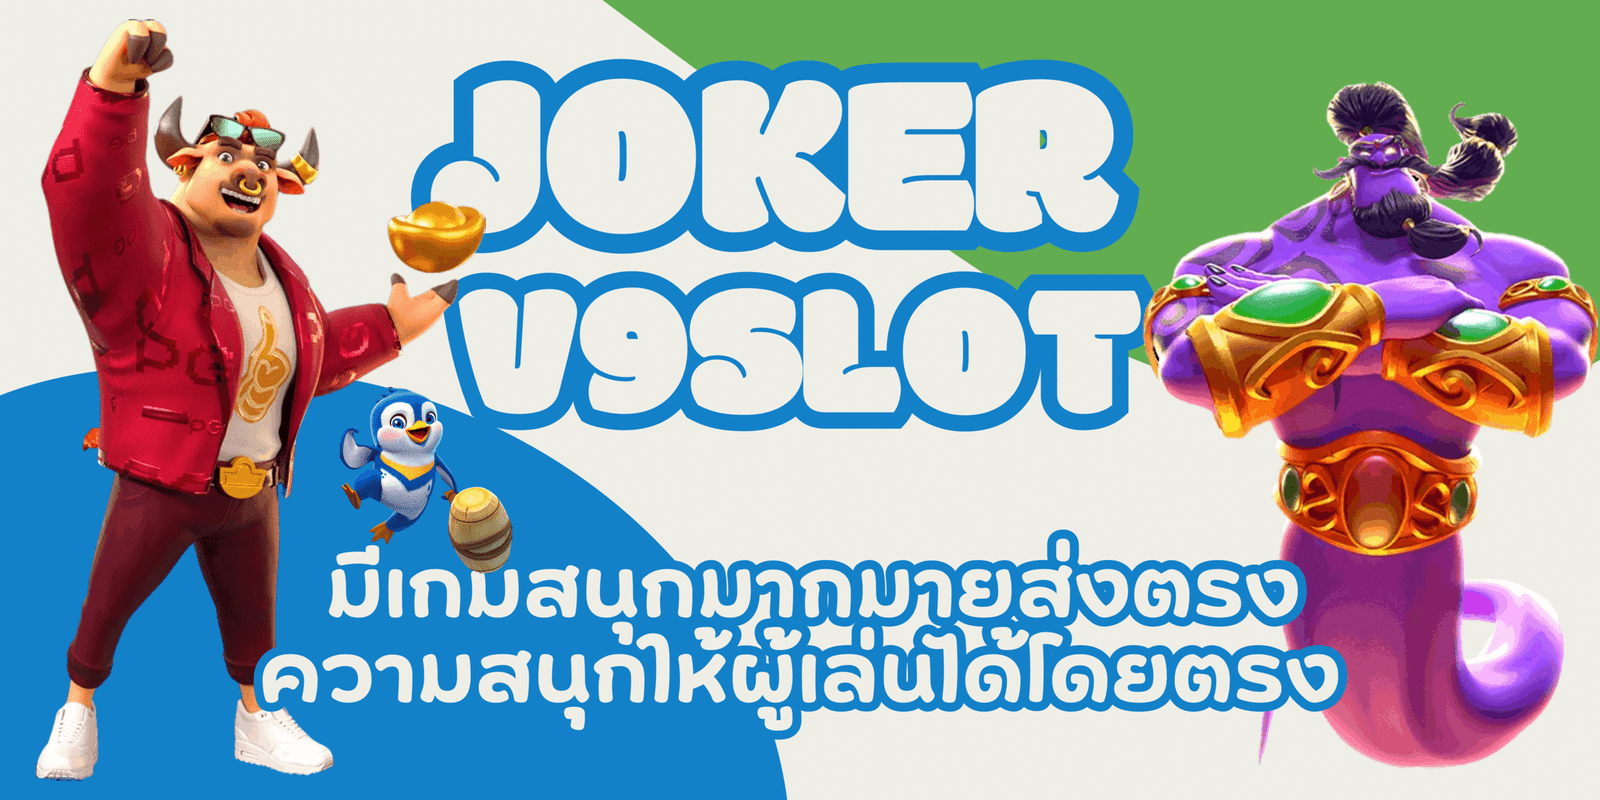 joker-v9slot-สมัครสมาชิก